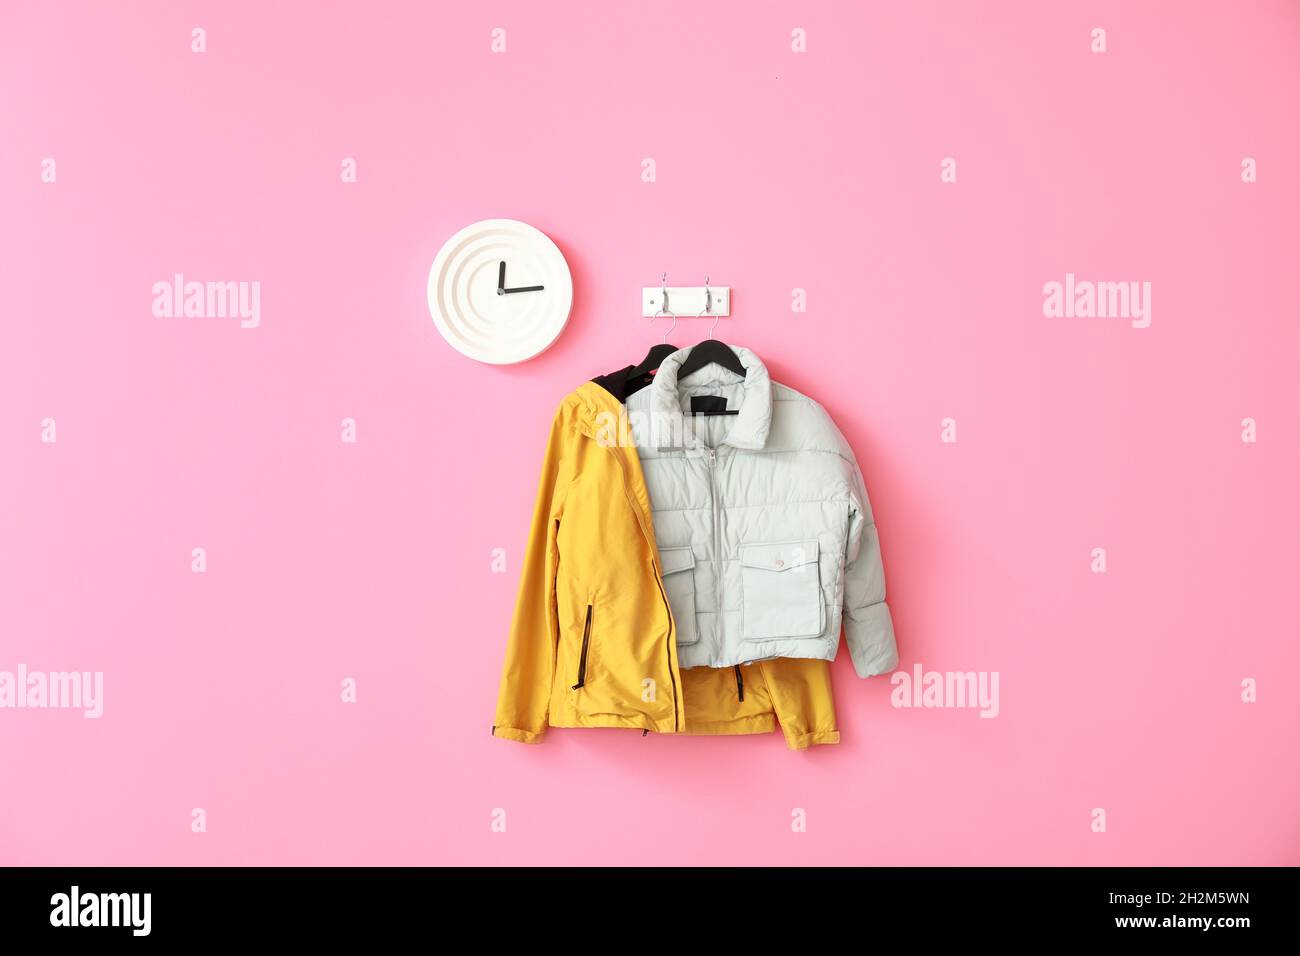 Stylish jackets and clock hanging on pink wall Stock Photo